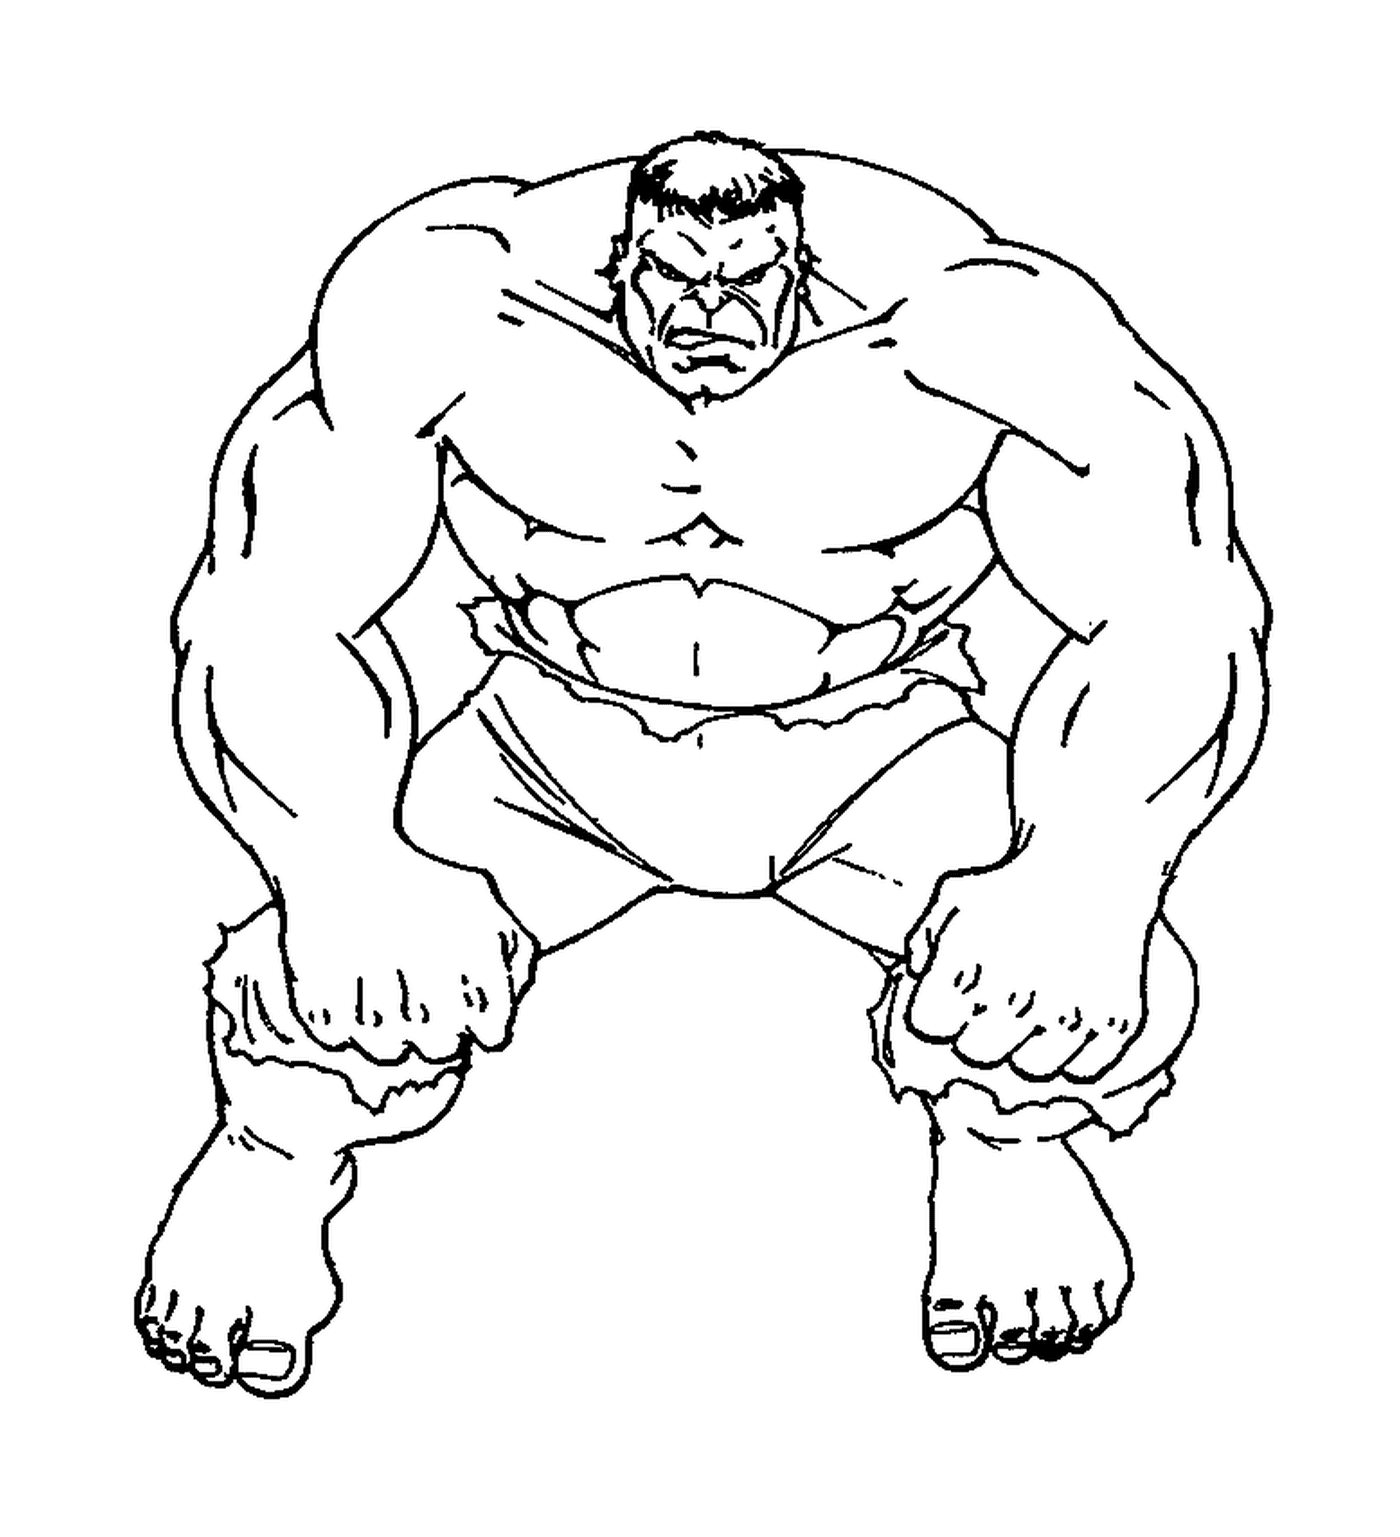  Hulk muscular in a drawing 